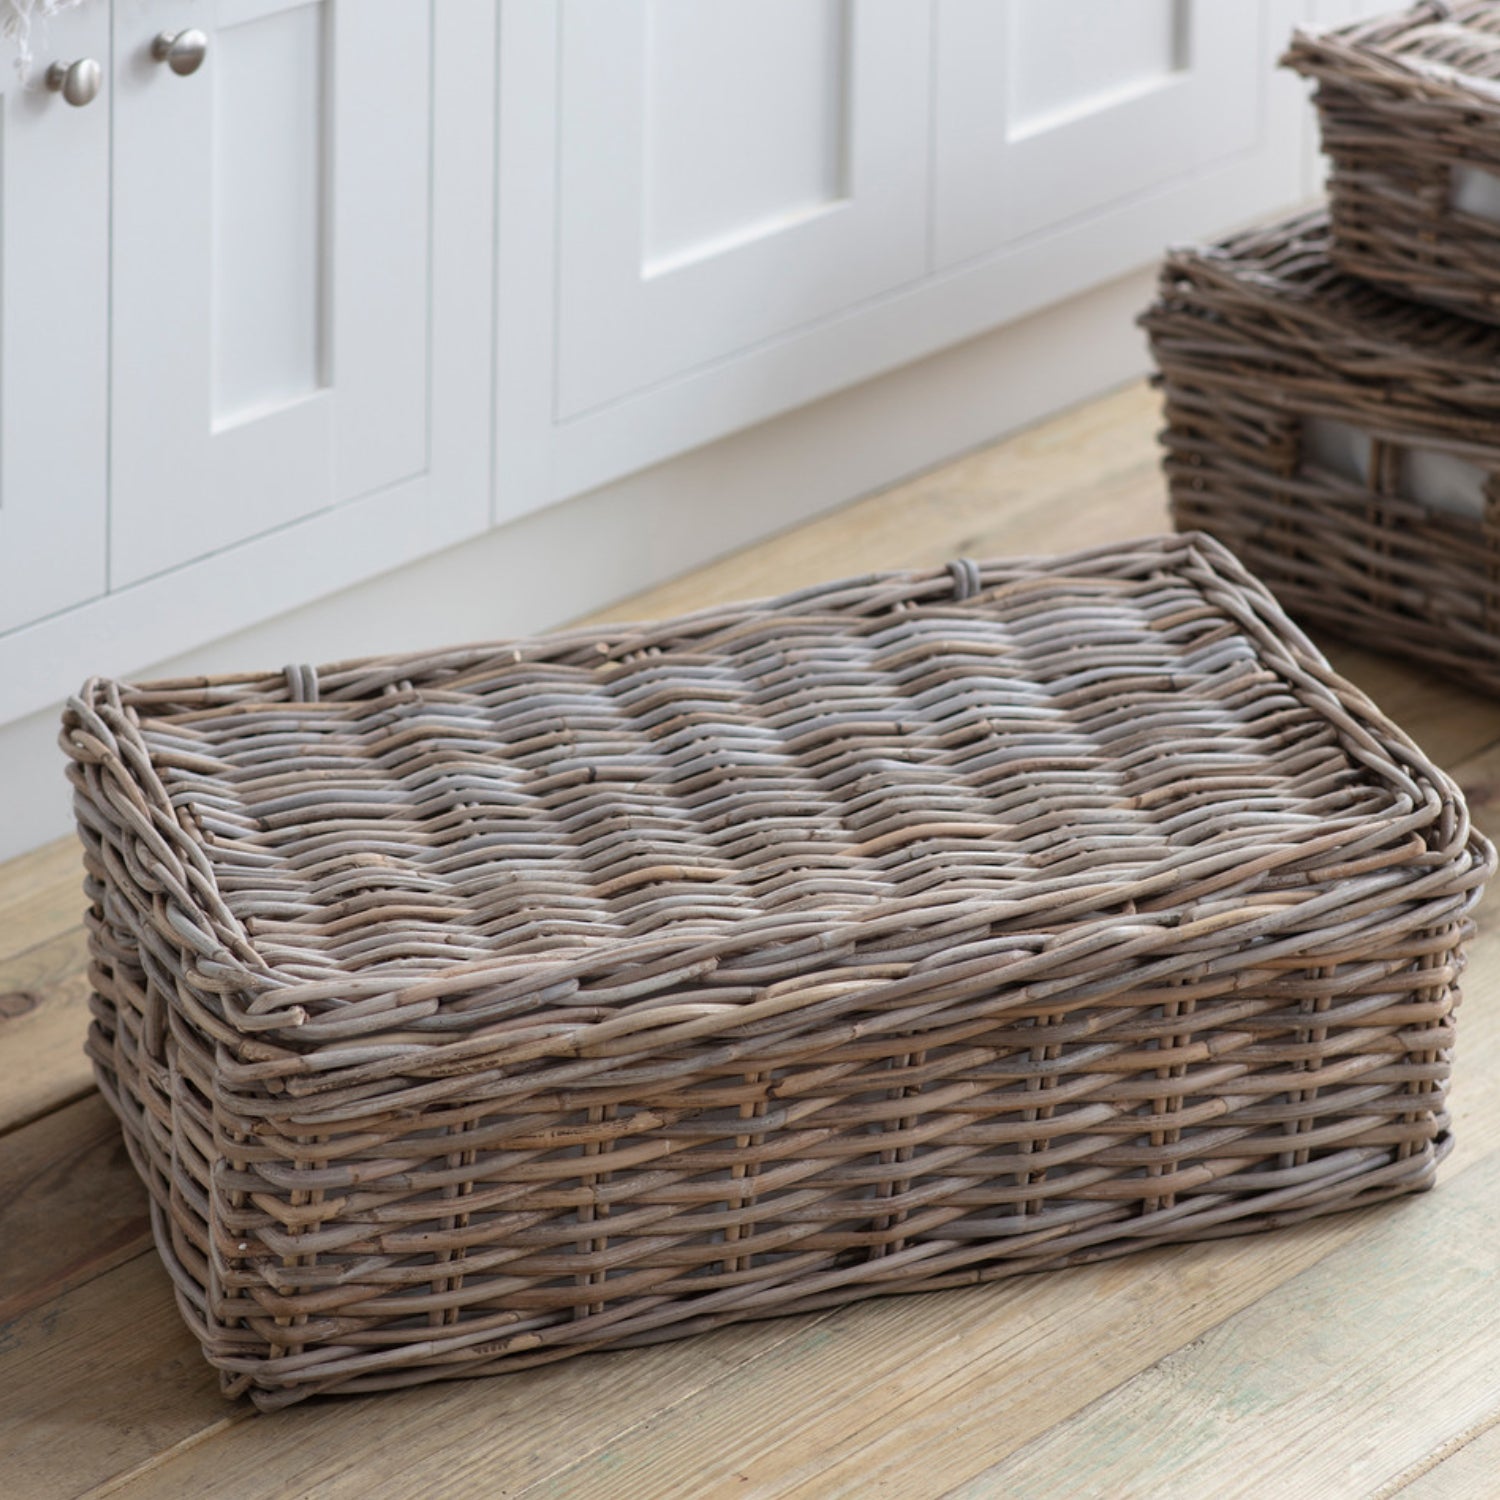 Bembridge Basket Medium with Lid by Garden Trading - Rattan